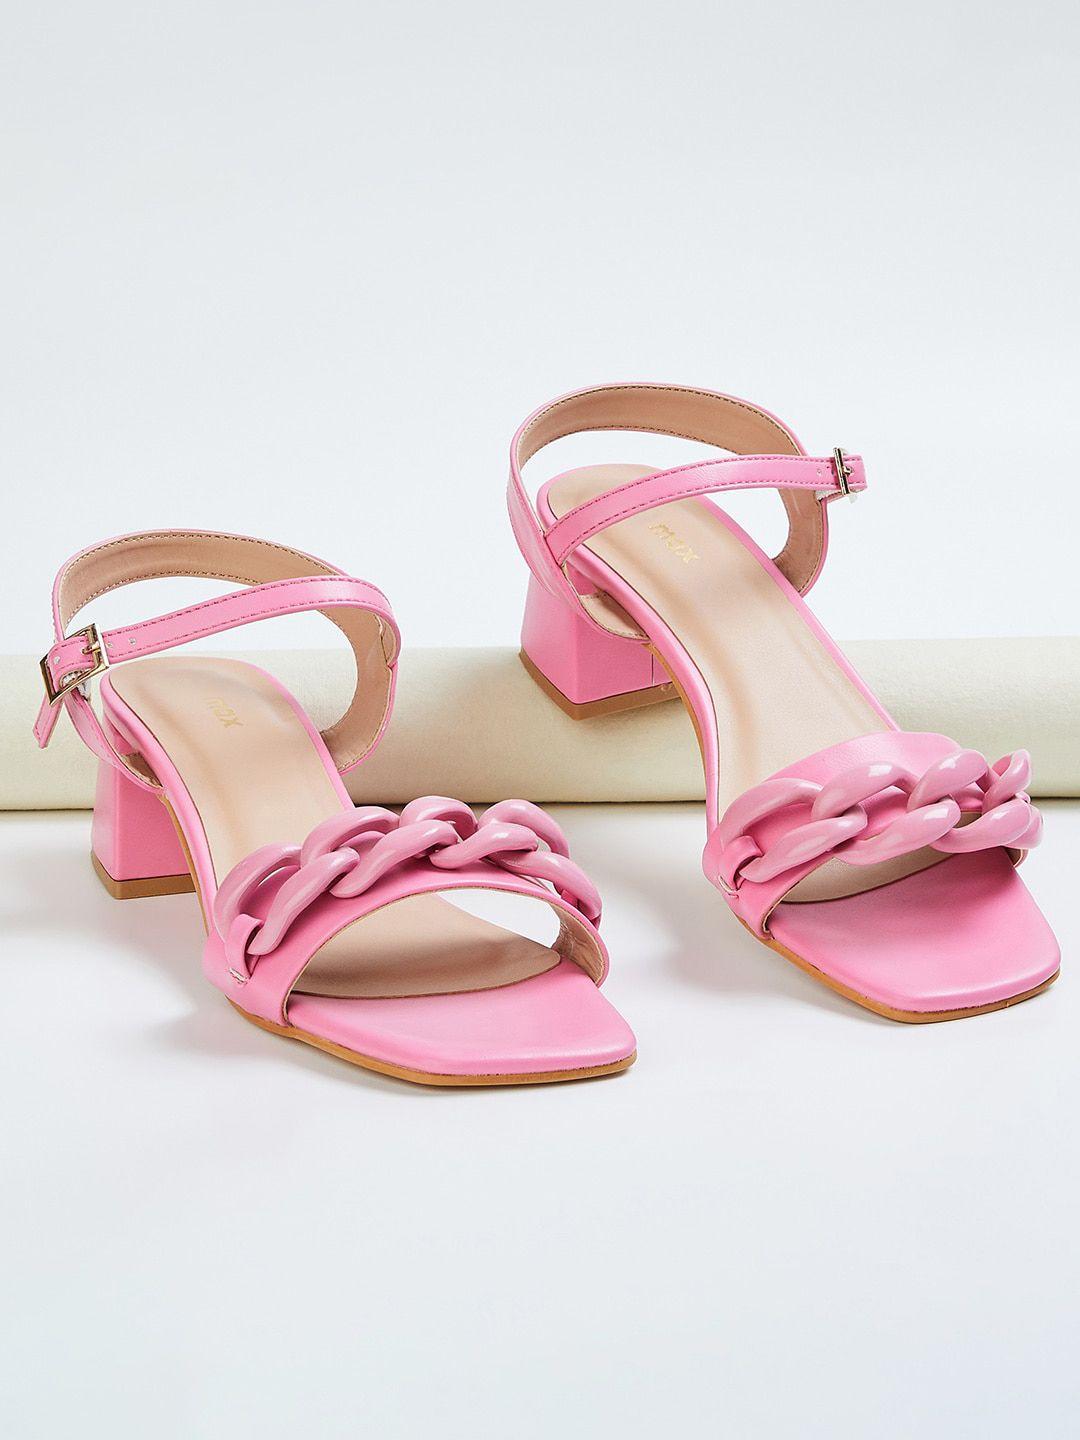 max-embellished-open-toe-block-heels